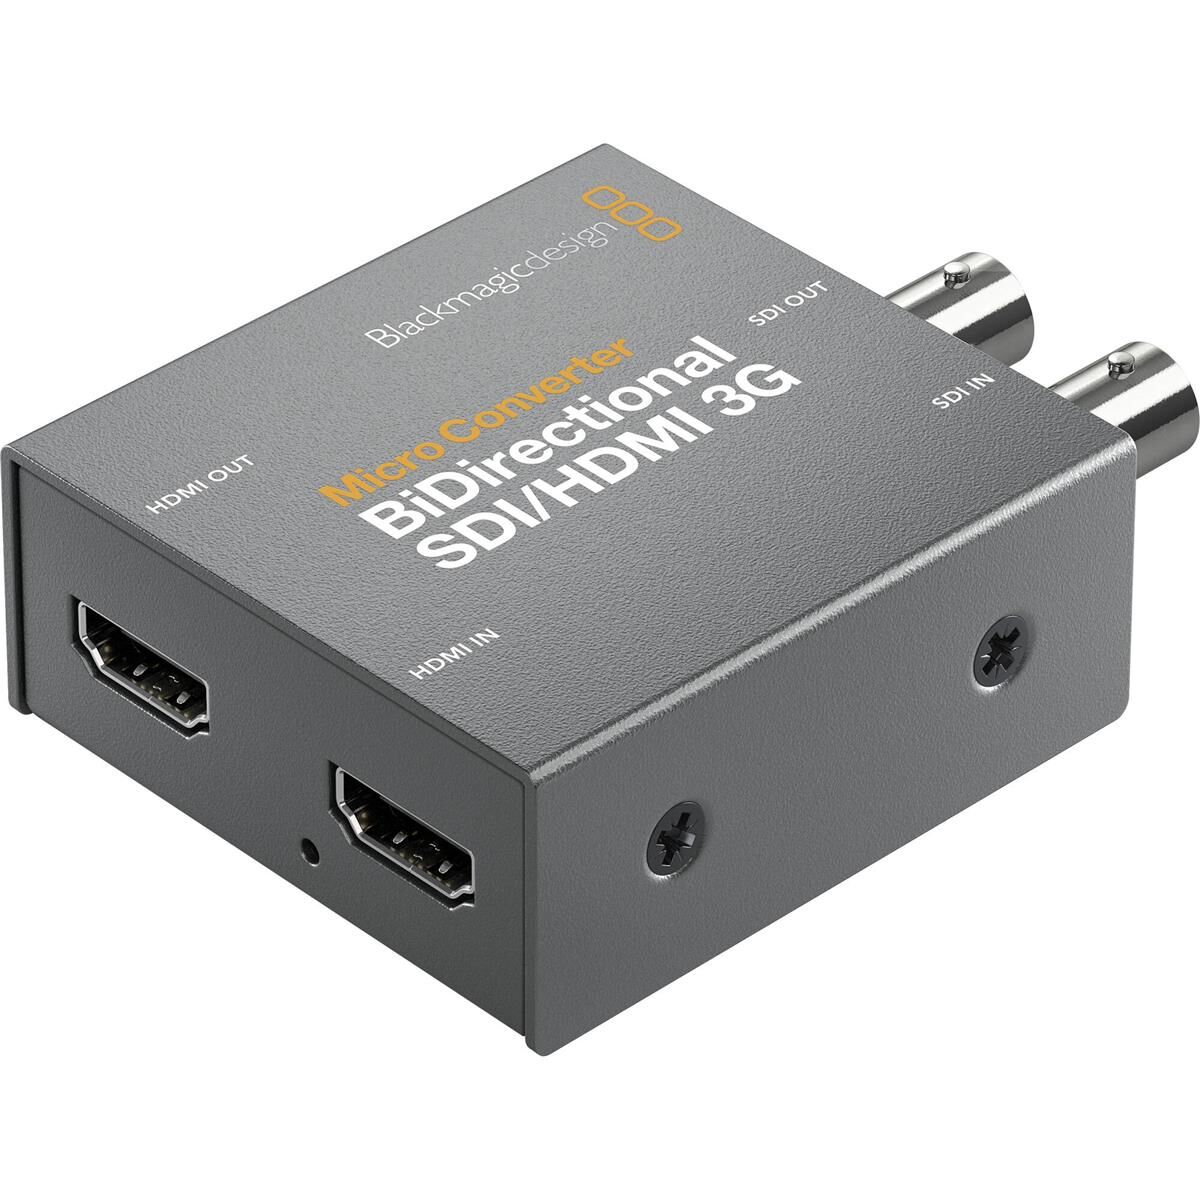 Blackmagic Design Bi-Directional SDI to HDMI 3G Micro Converter